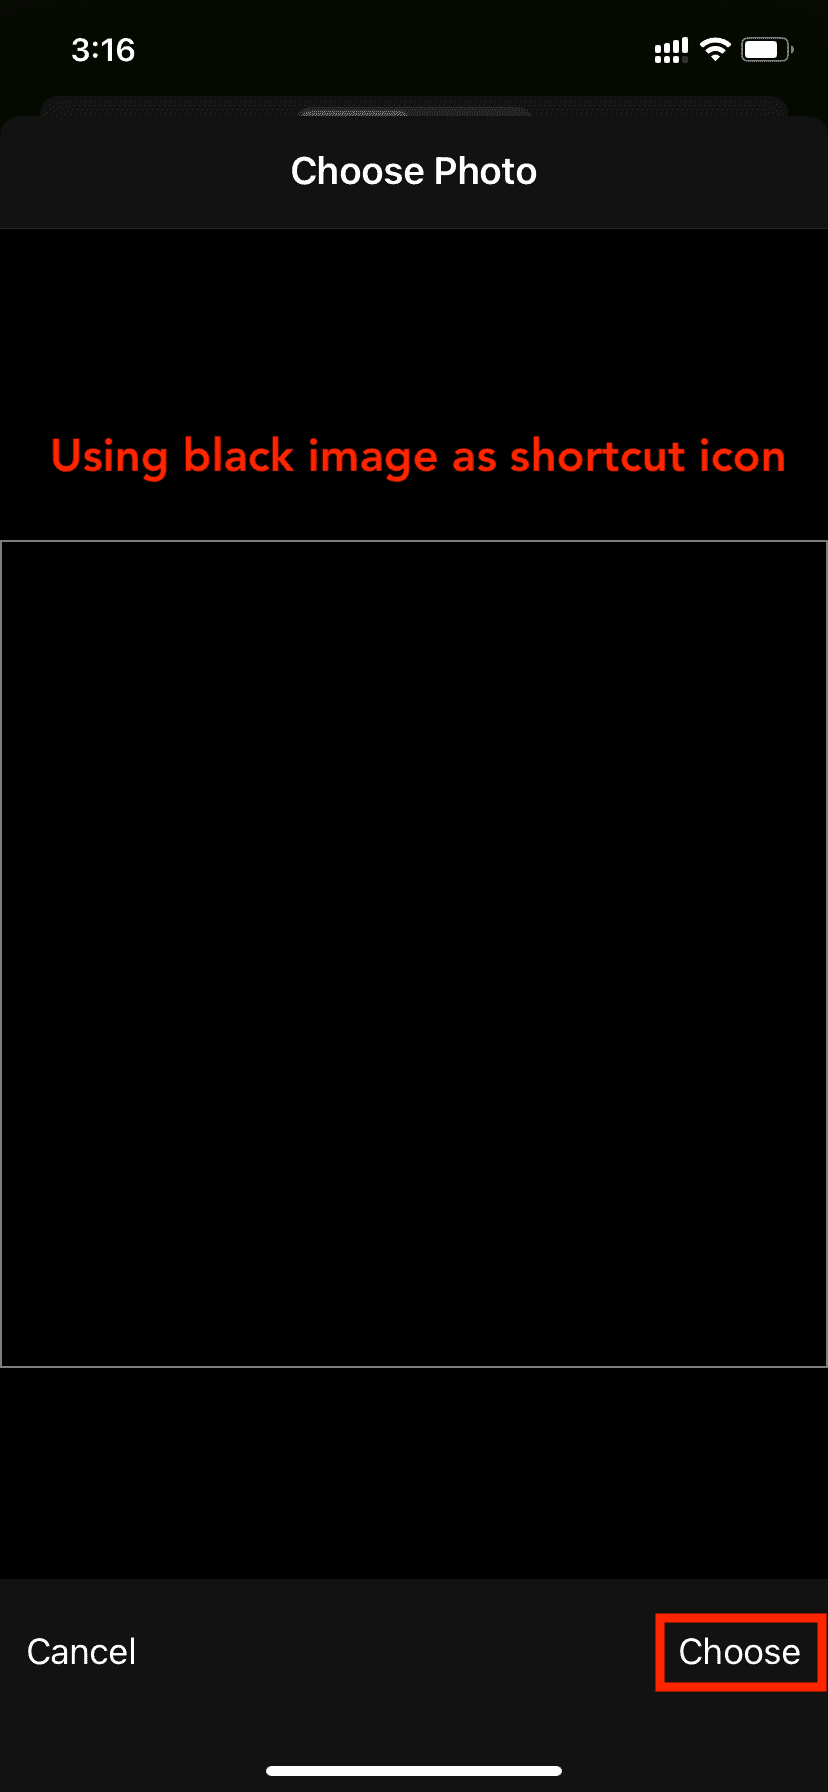 Pick a black image for shortcut icon